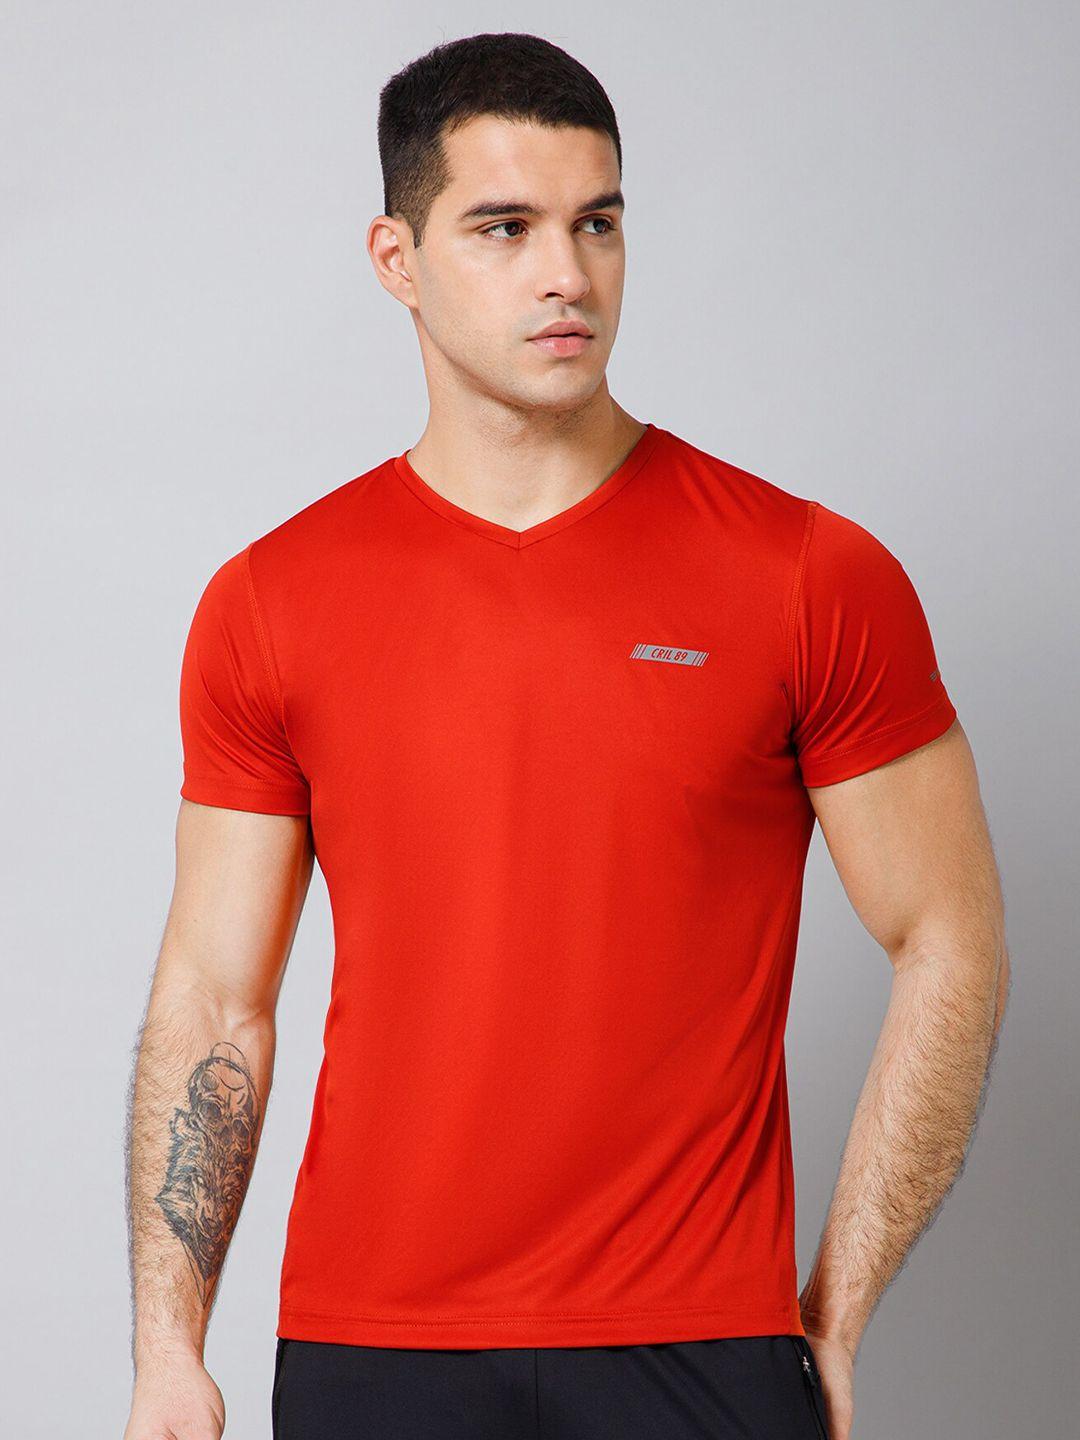 cantabil v-neck sports t-shirt